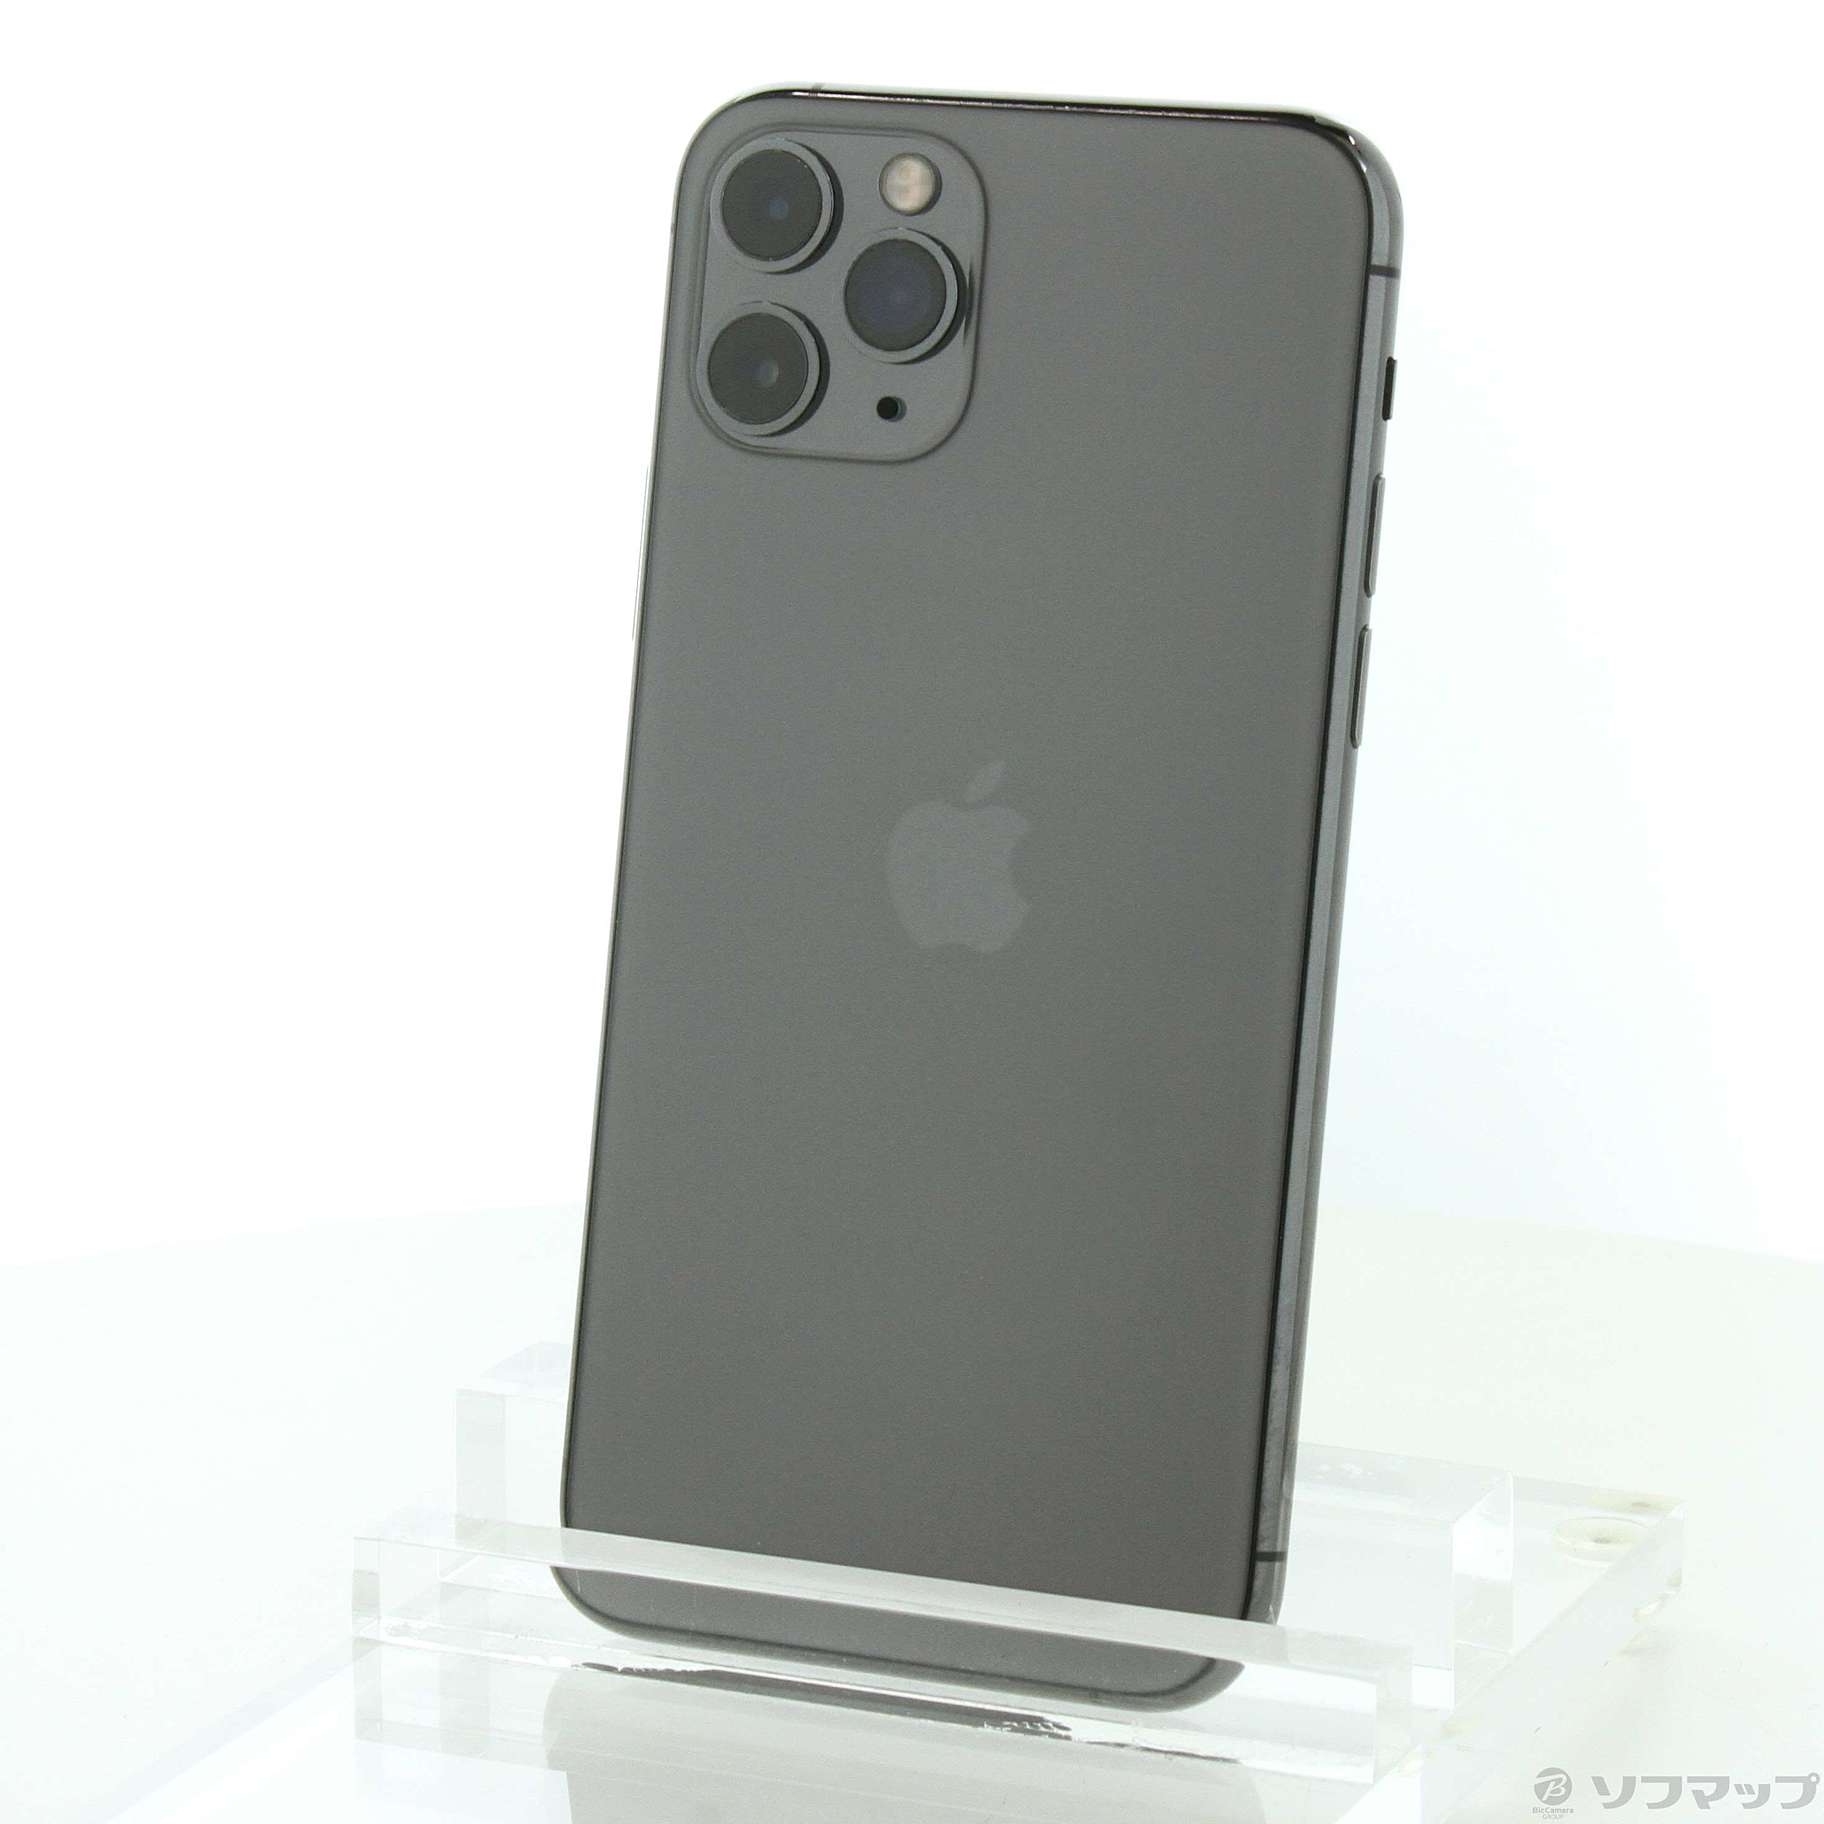 iPhone11 Pro Max スペースグレイ 256GB SIMフリー - 携帯電話